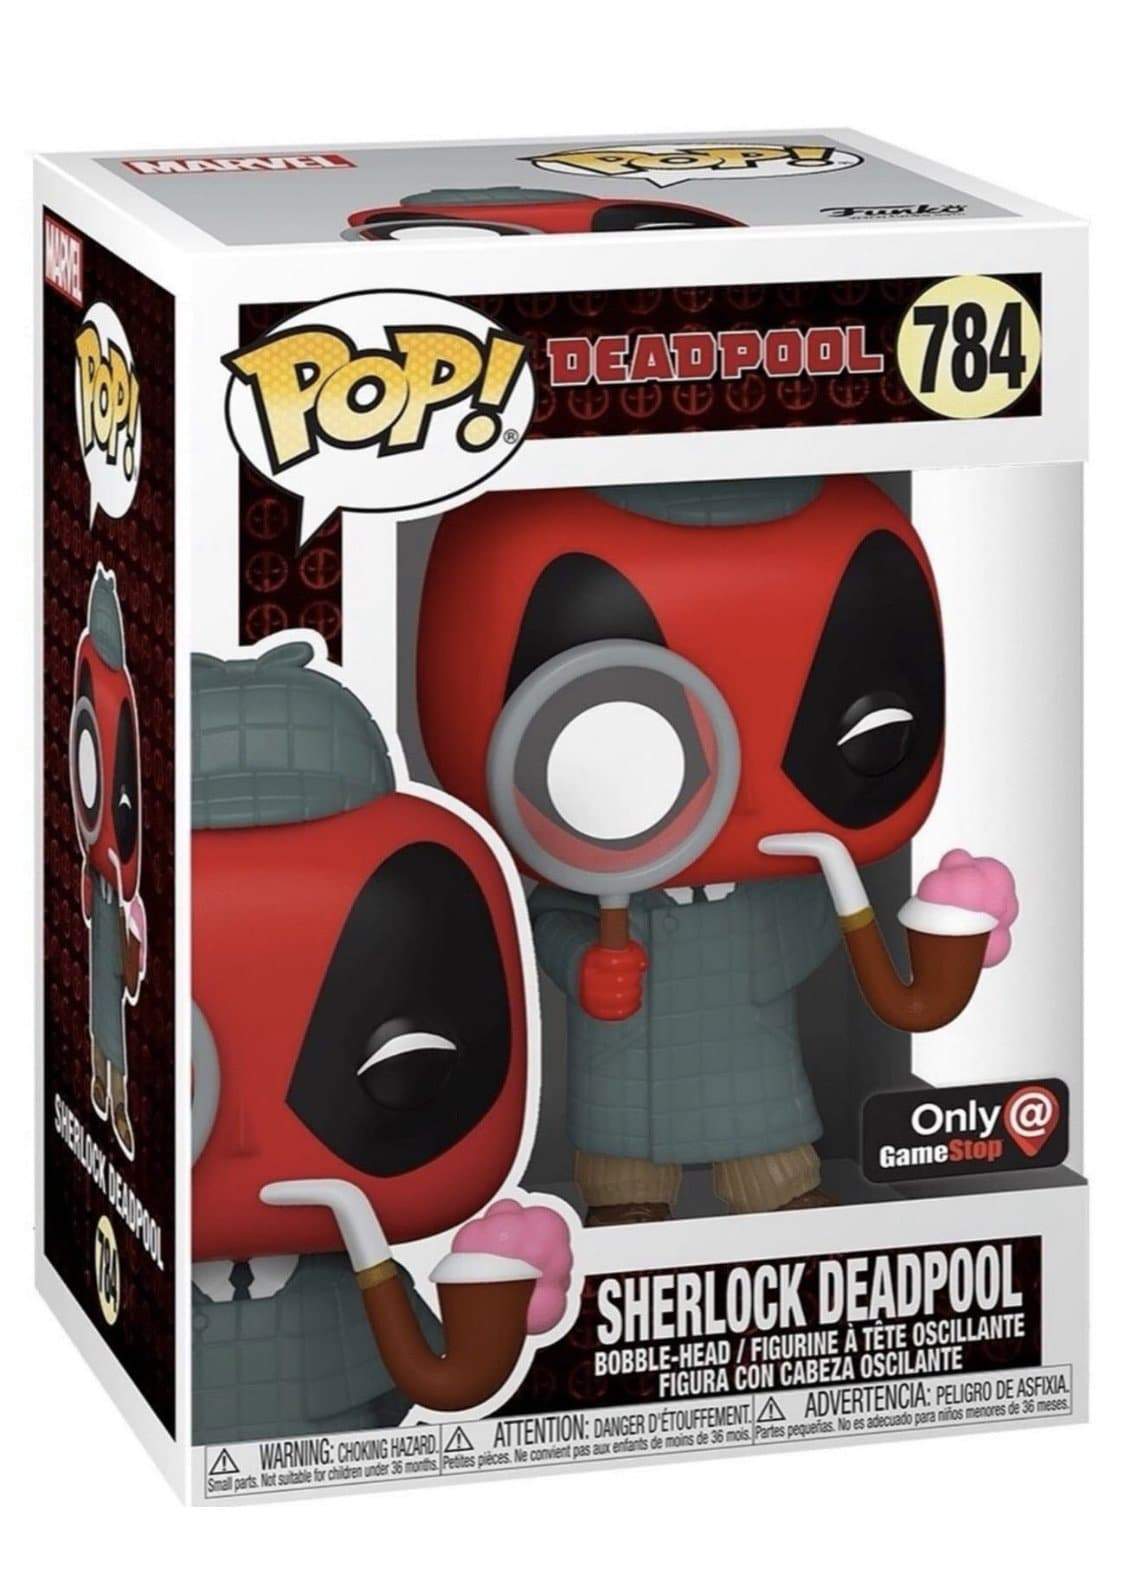 Sherlock Deadpool #784 Funko Pop! Deadpool, Gamestop Exclusive